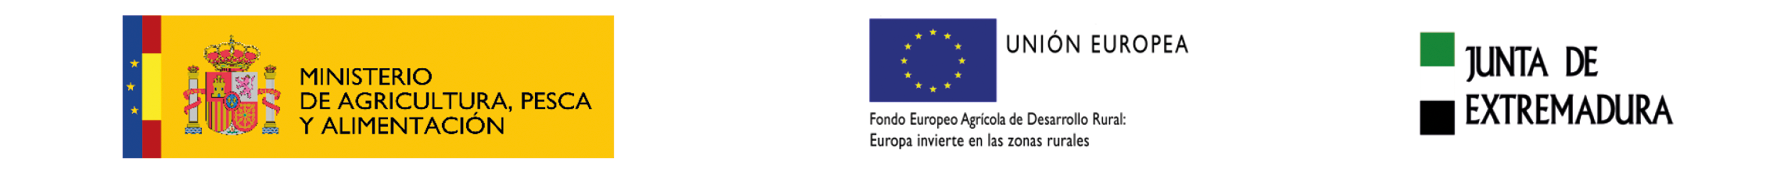 LOGO MINISTERIO DE AGRICULTURA, PESCA Y ALIMENTACIÓN - UNION EUROPEA - JUNTA DE EXTREMADURA